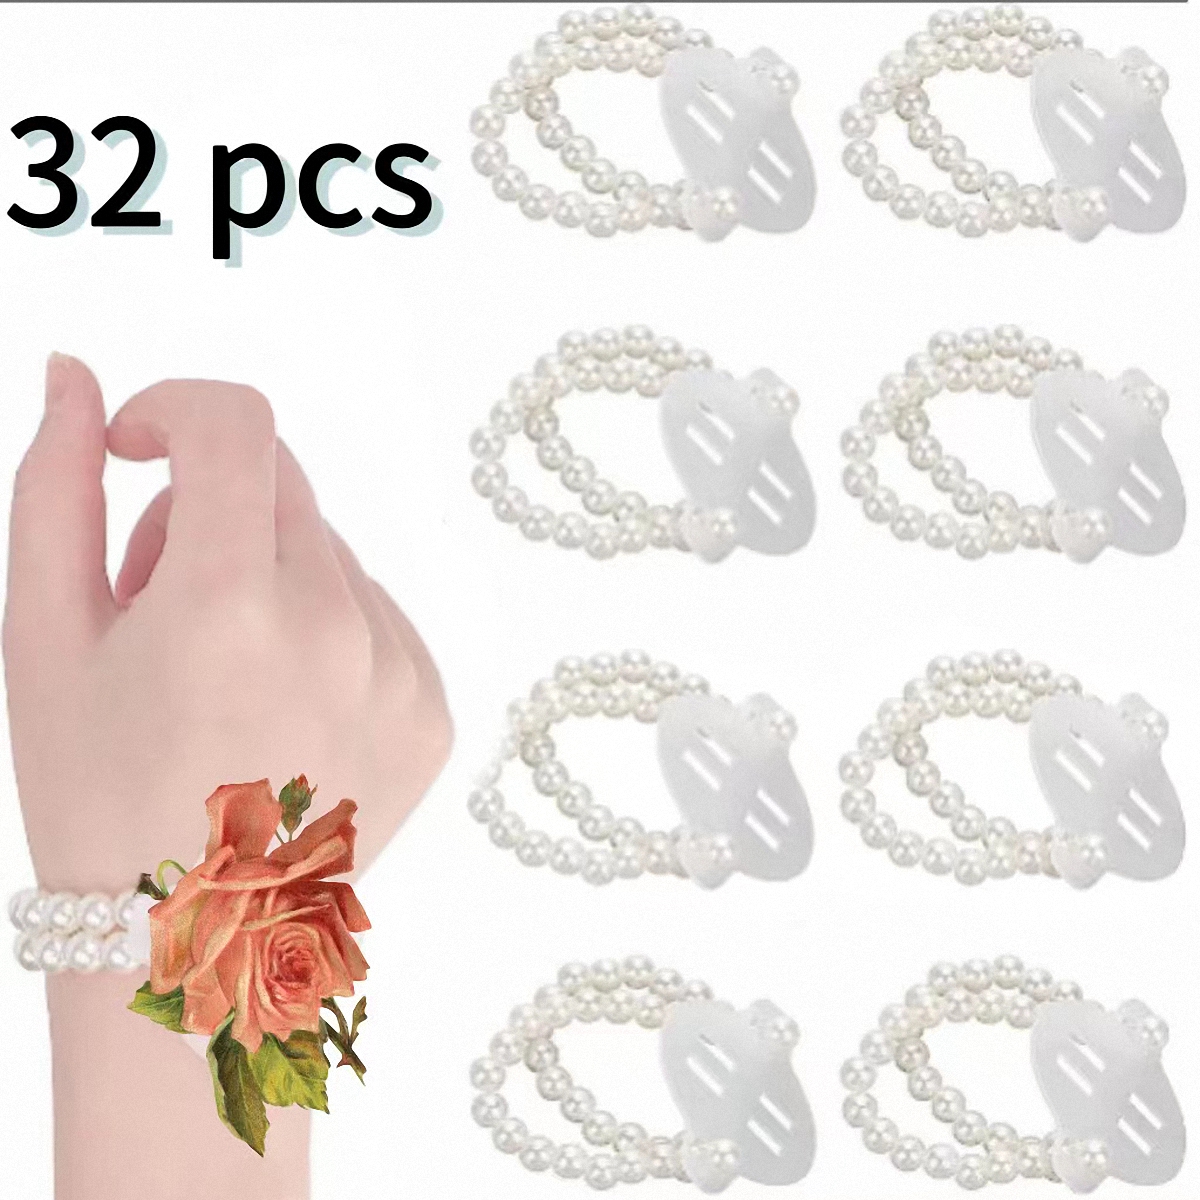 How To Make A Floral Bracelet / Wrist Corsage